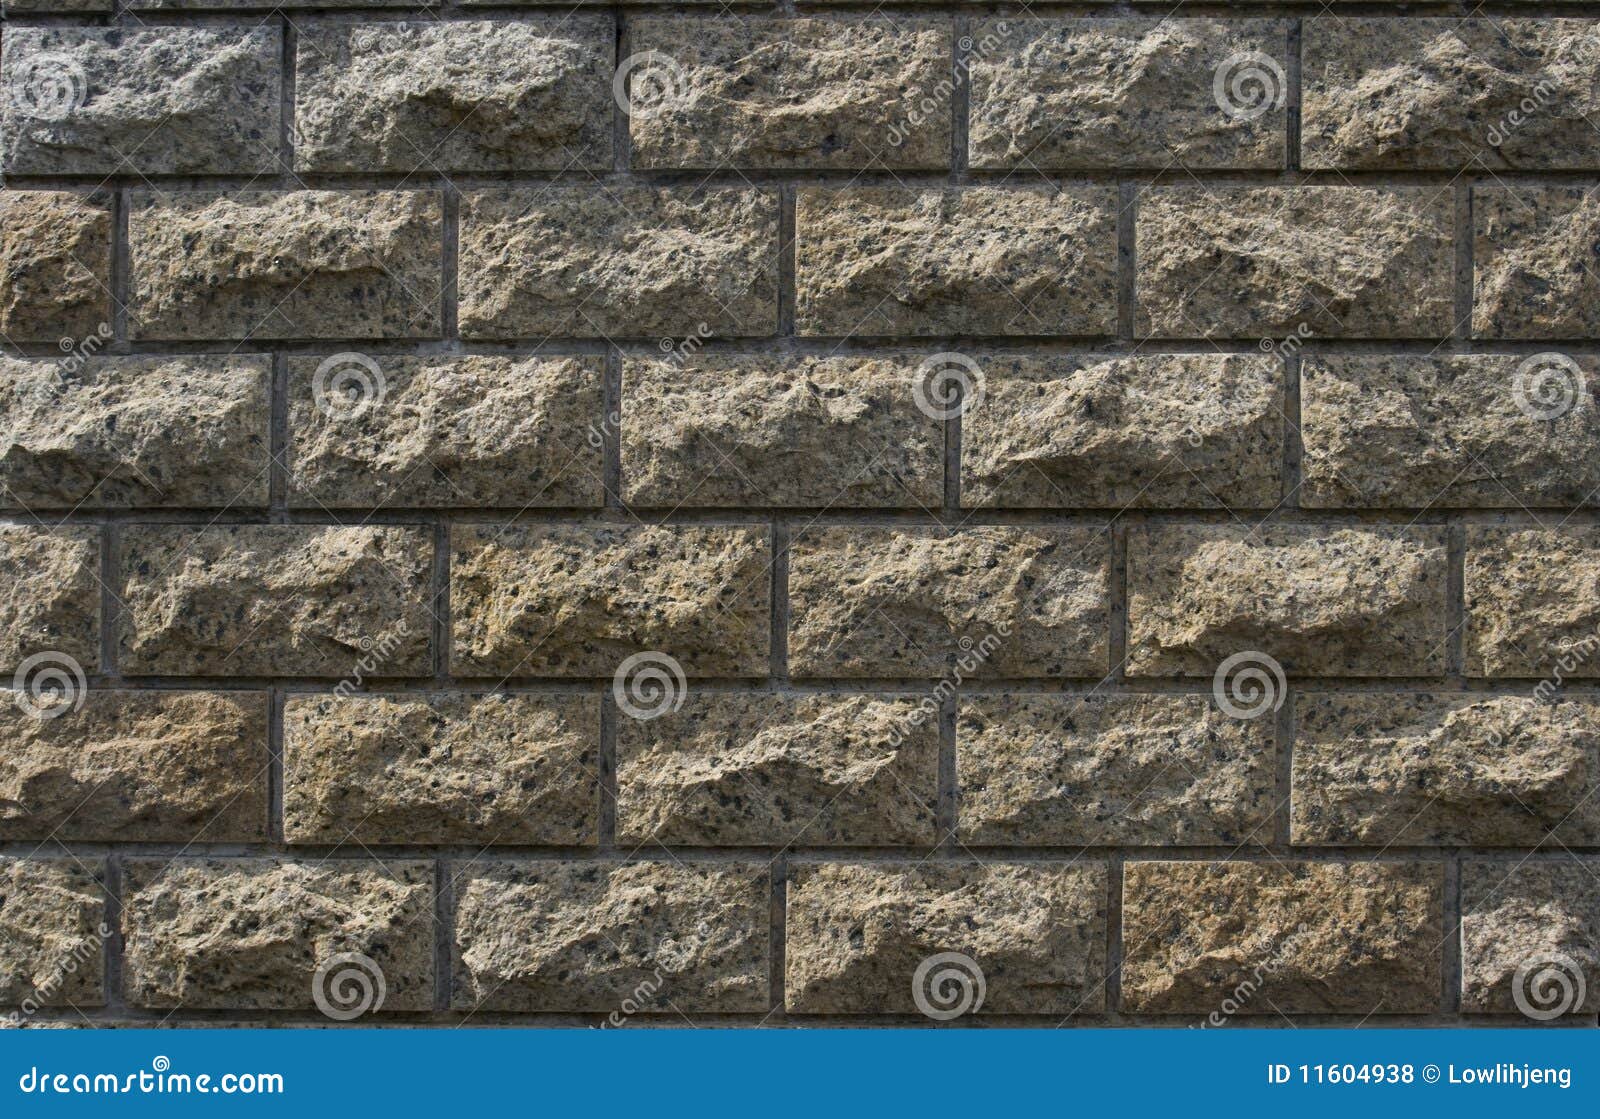 light coloured stone brick wall cladding 11604938